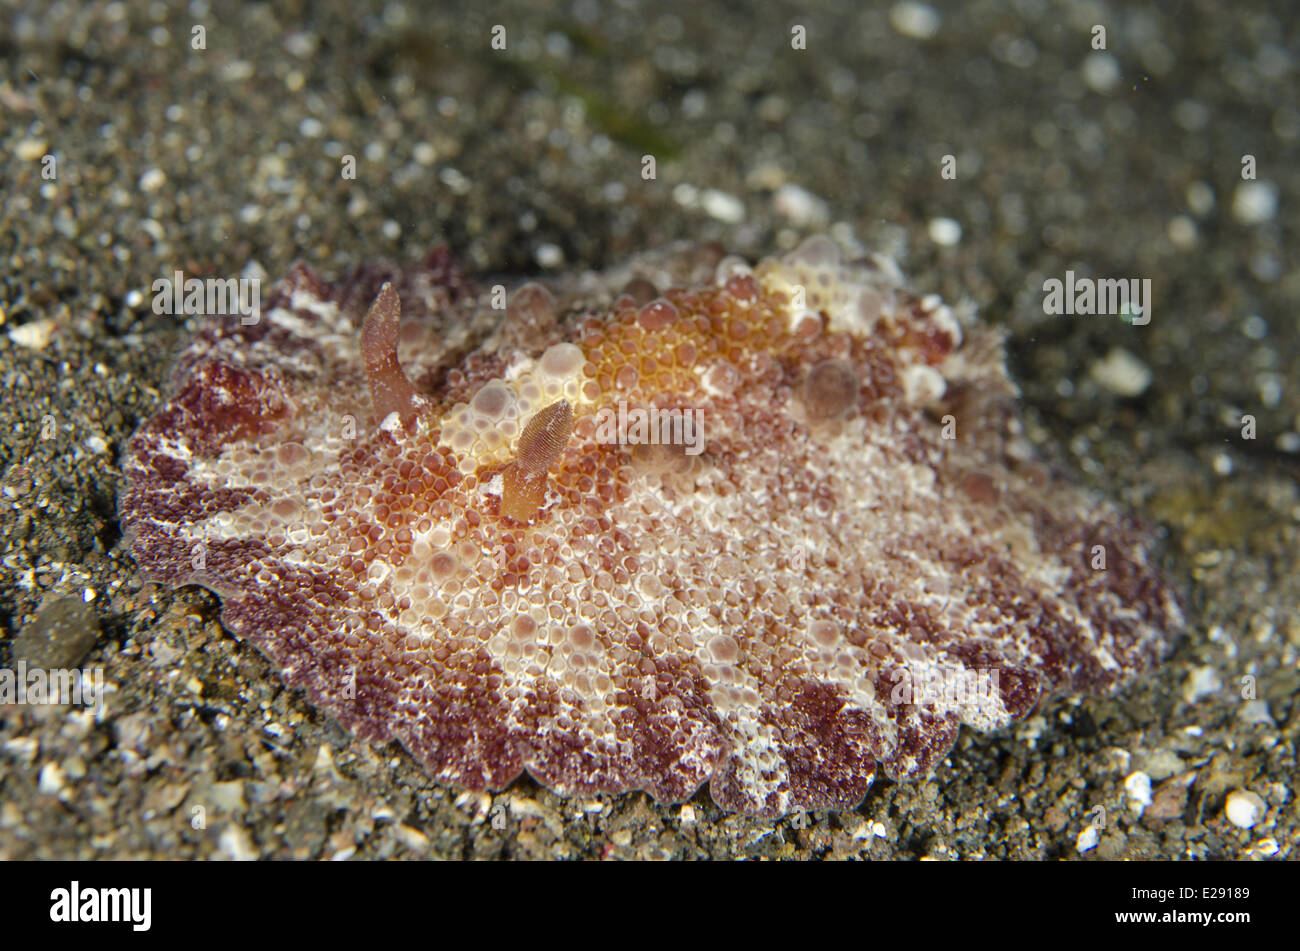 Schmeltz Discodoris Nudibranch (Discodoris schmeltziana) adult, crawling on sand, Horseshoe Bay, Nusa Kode, Rinca Island, Komodo N.P., Lesser Sunda Islands, Indonesia, March Stock Photo